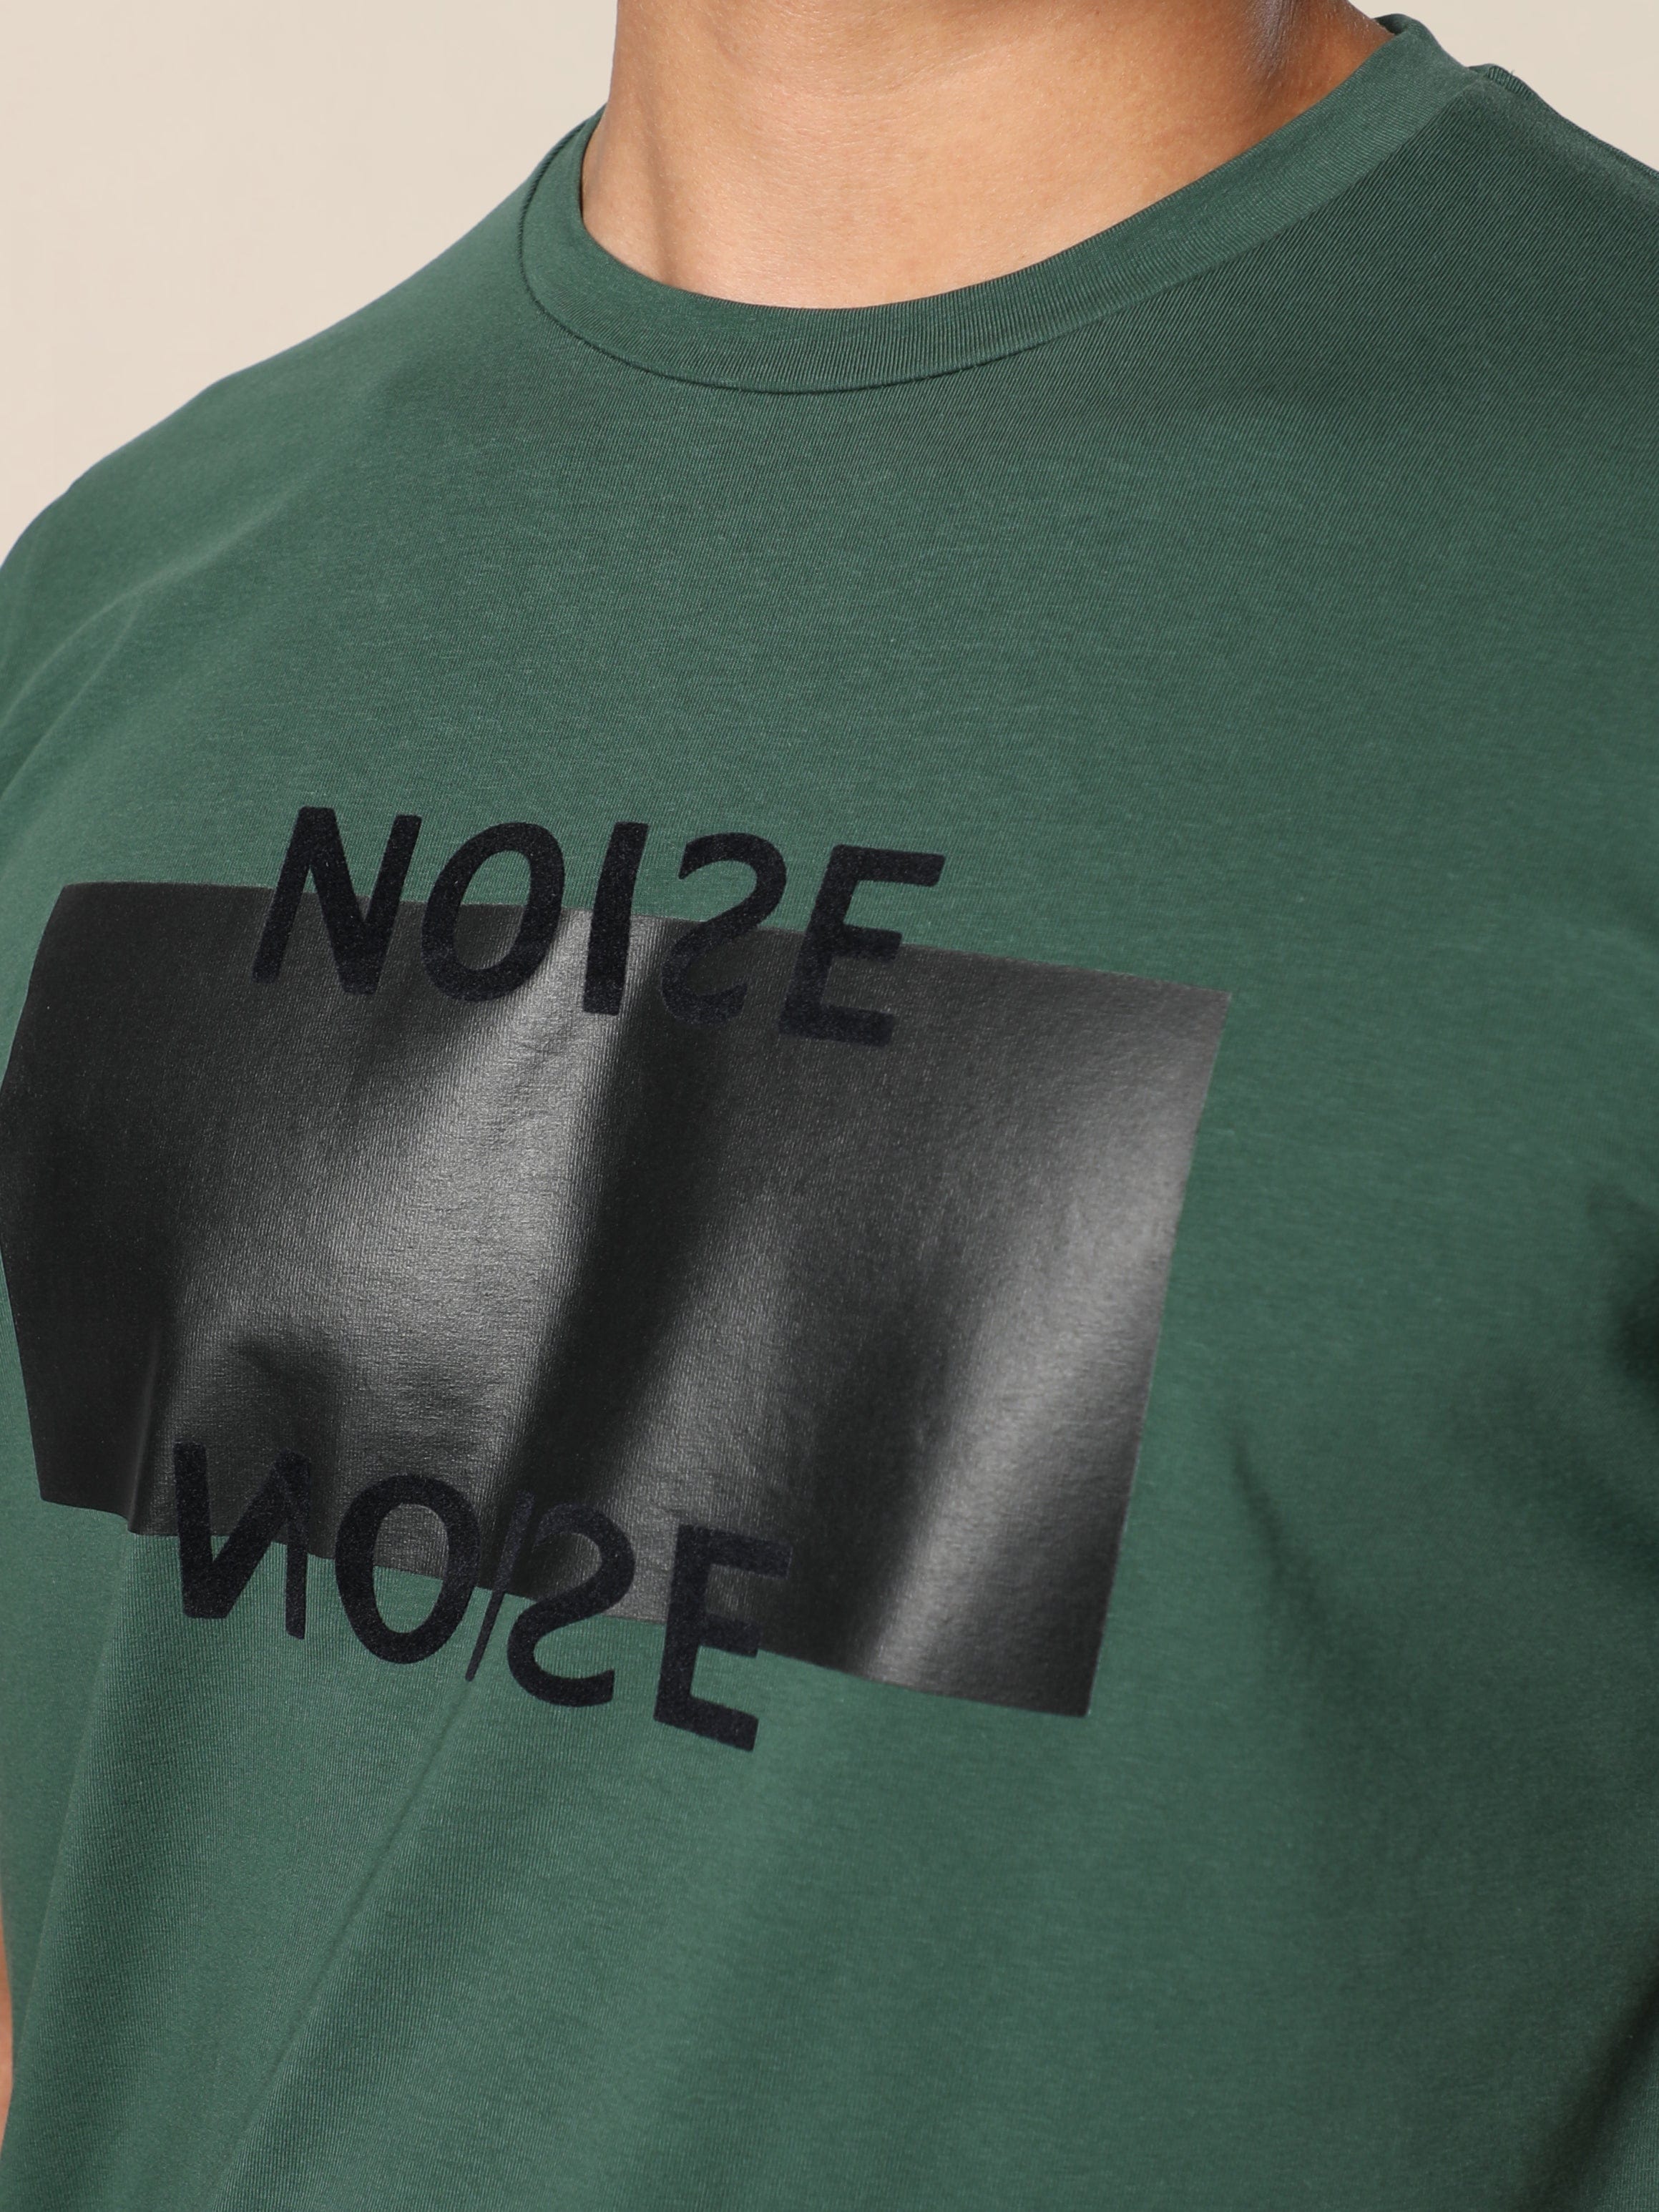 Noise Classy Designed Summer T-shirt